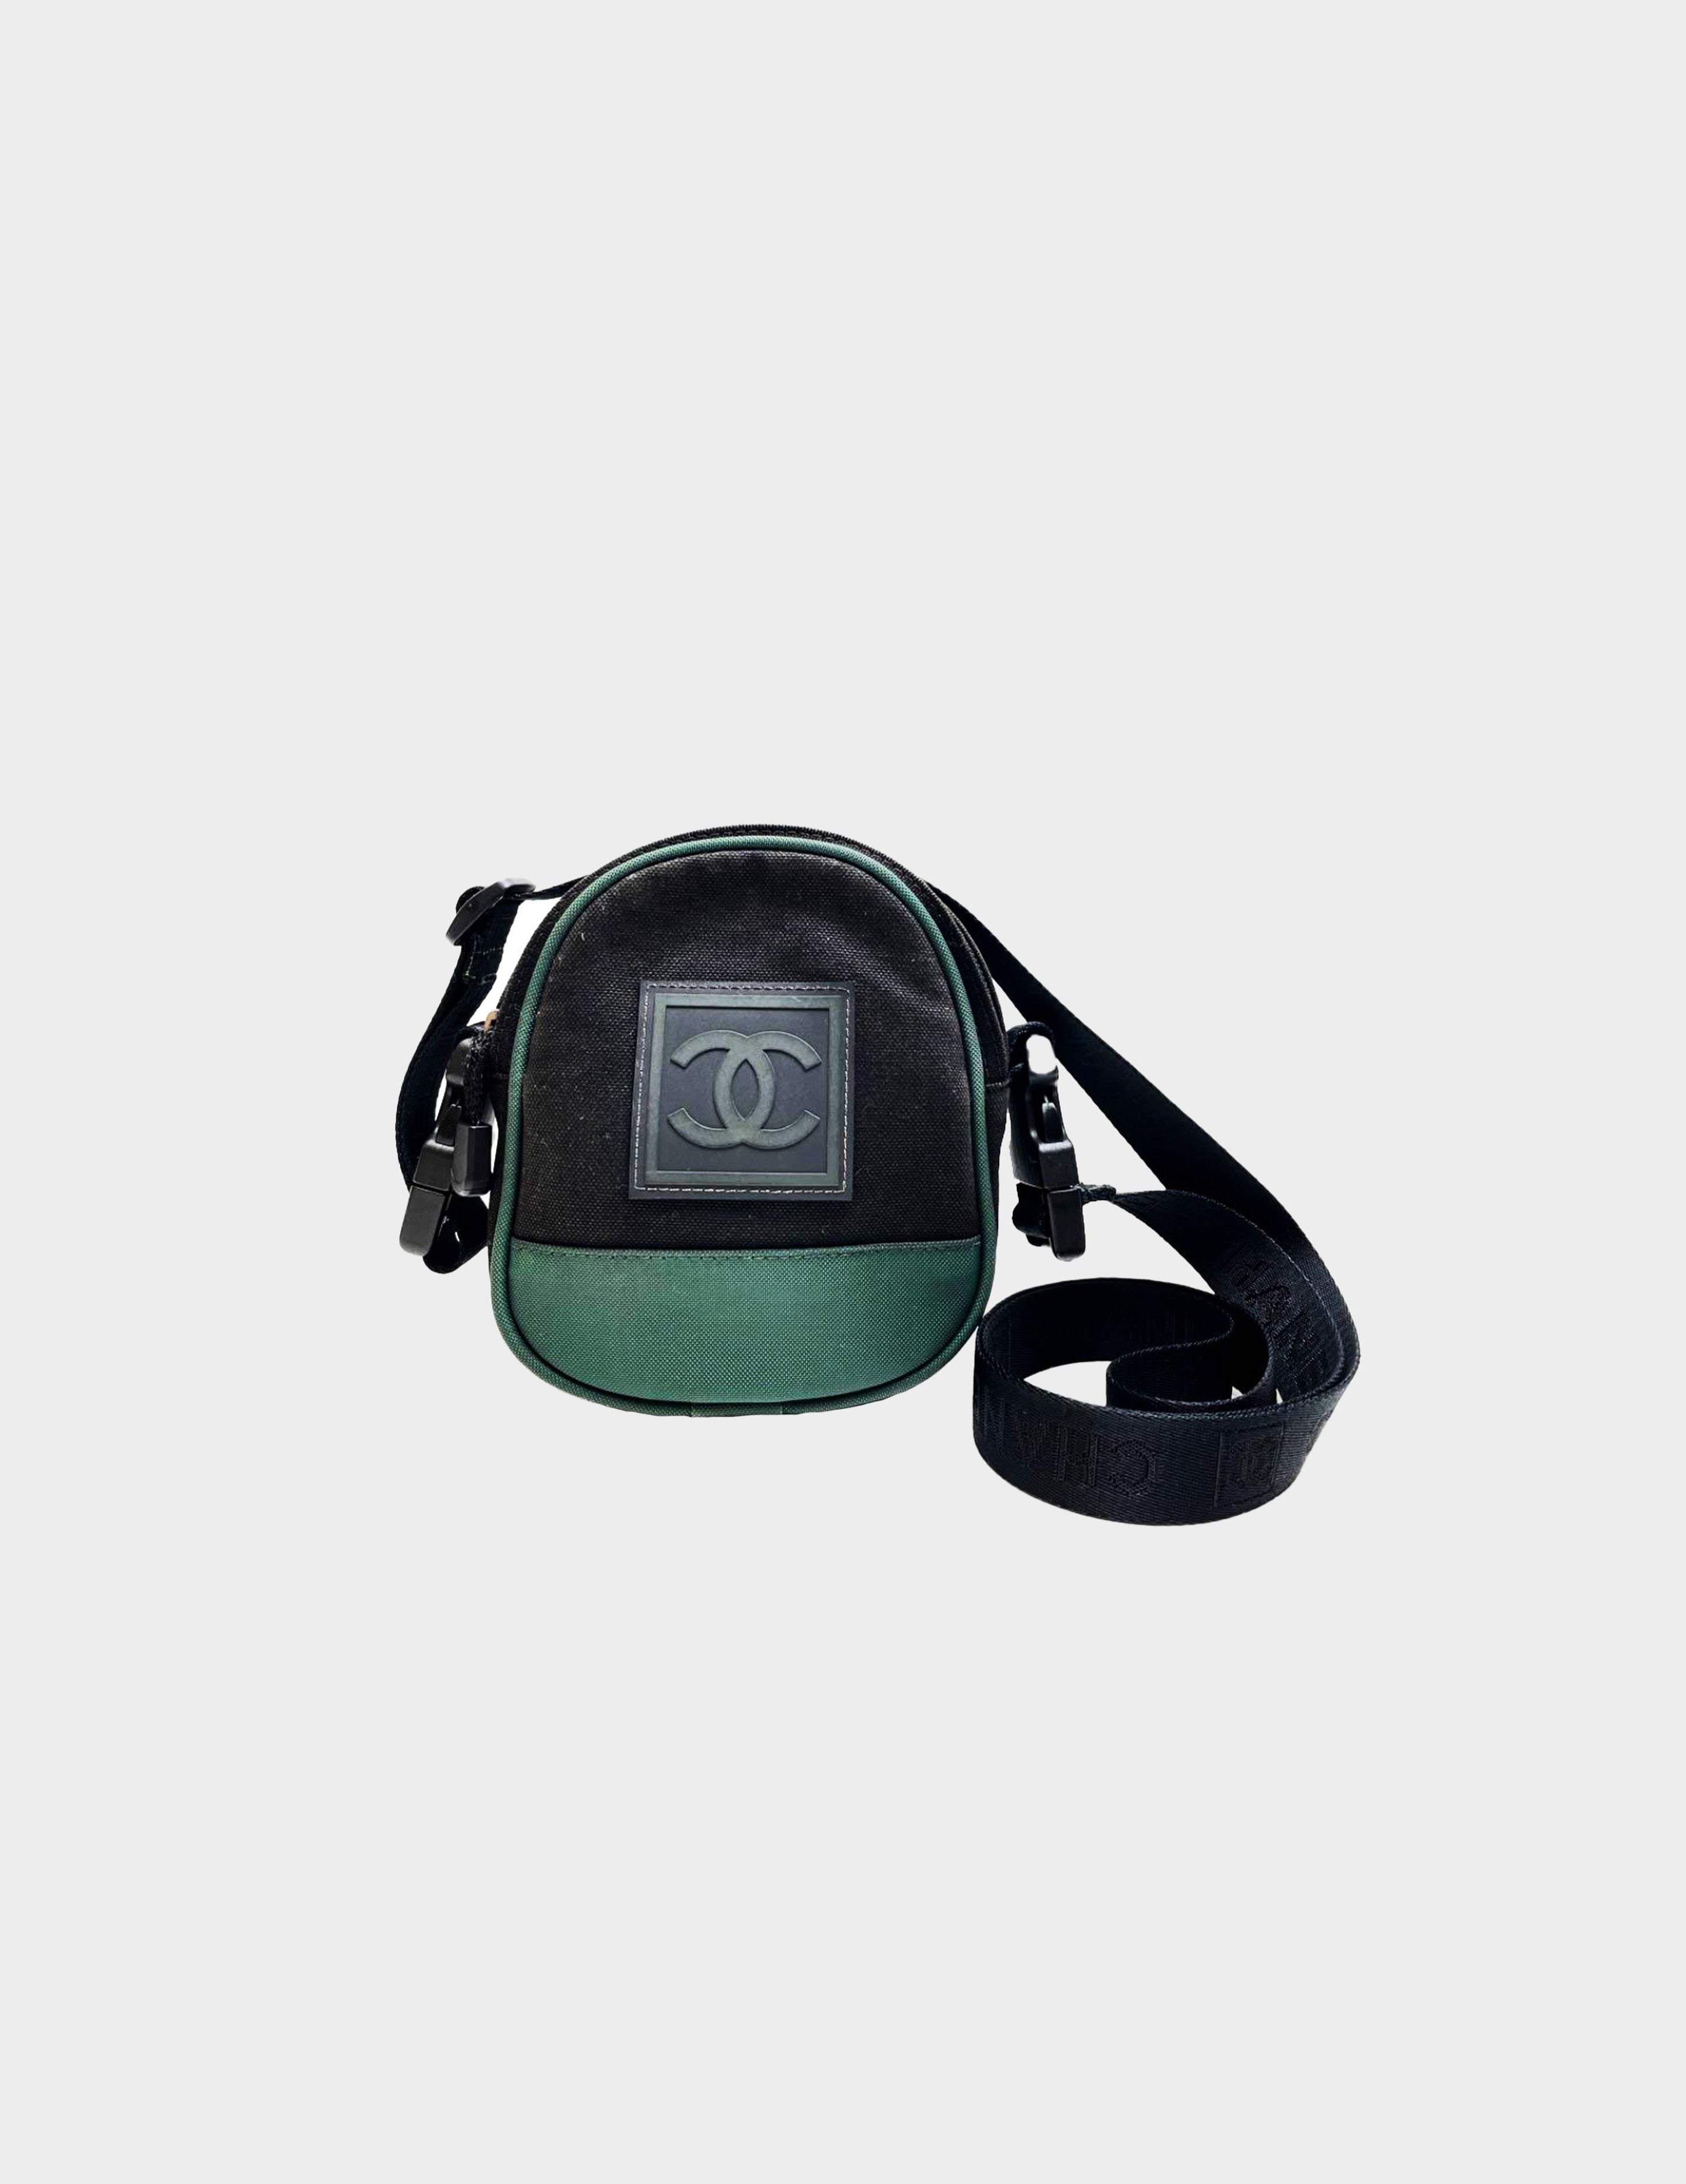 Chanel 2003 Sports Line Green Nylon Bag